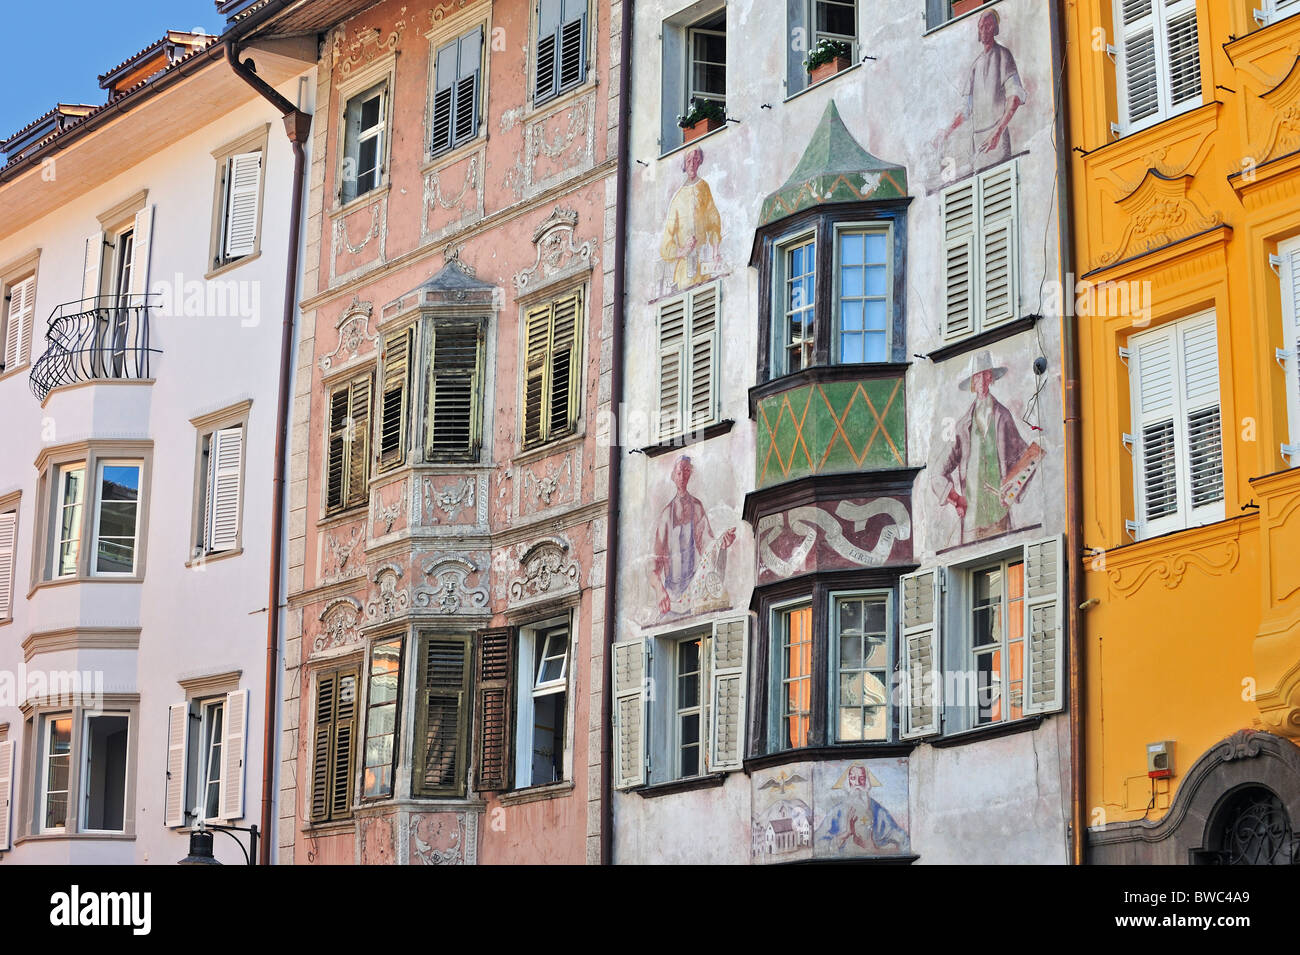 Historische Häuser an der Piazza del Municipio / Town Hall Square mit Stuck im Rokoko-Stil, Bolzano / Bozen, Dolomiten, Italien Stockfoto